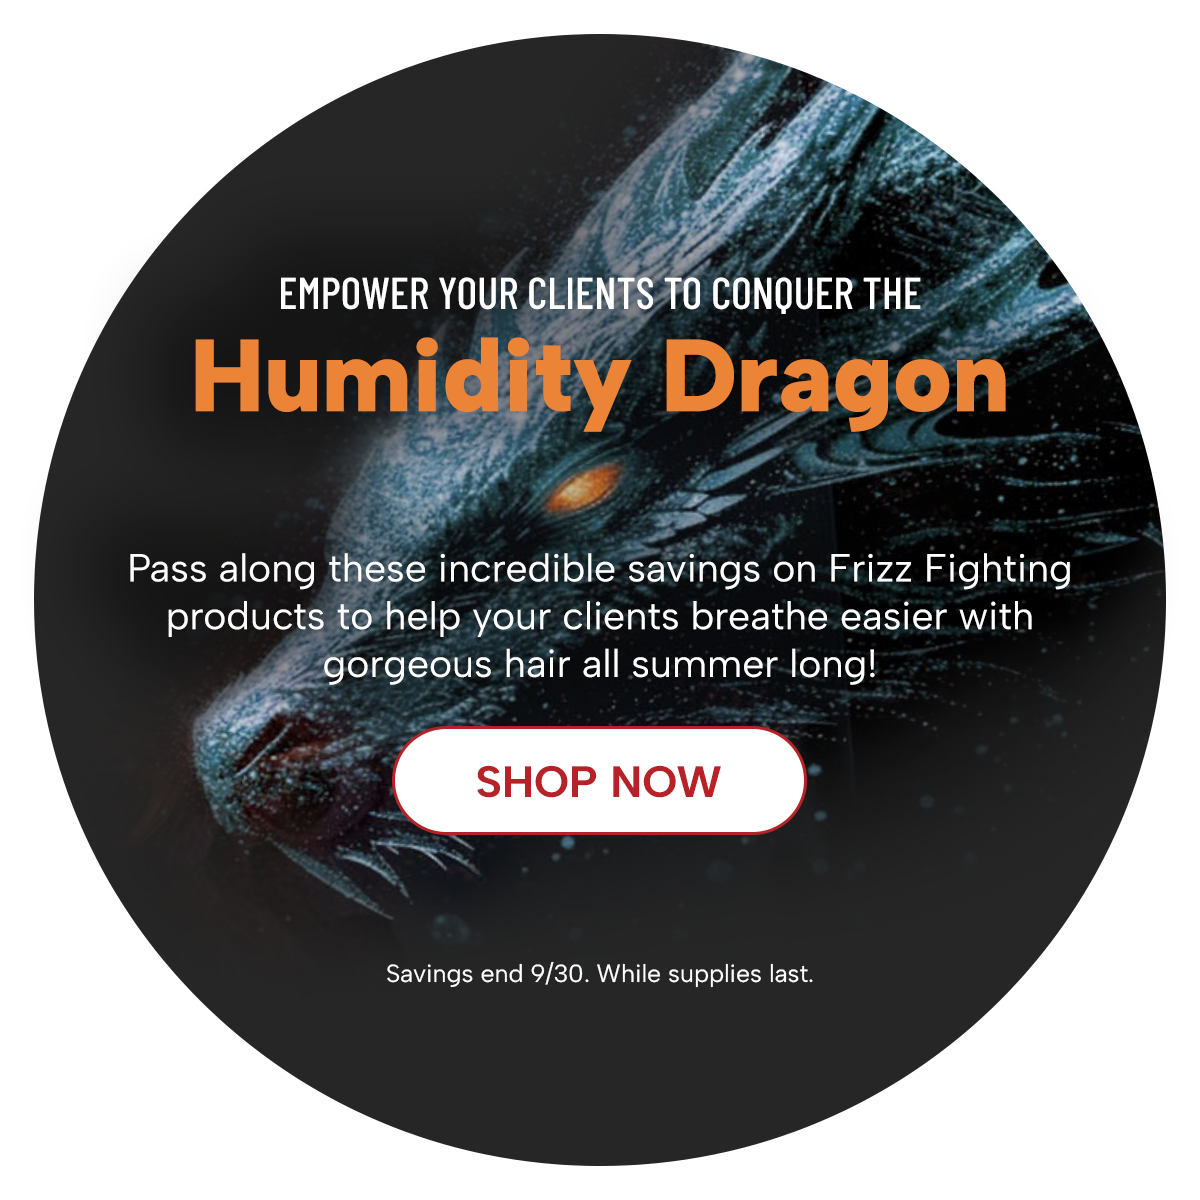 Humidity Dragon 7/26 - 9/30